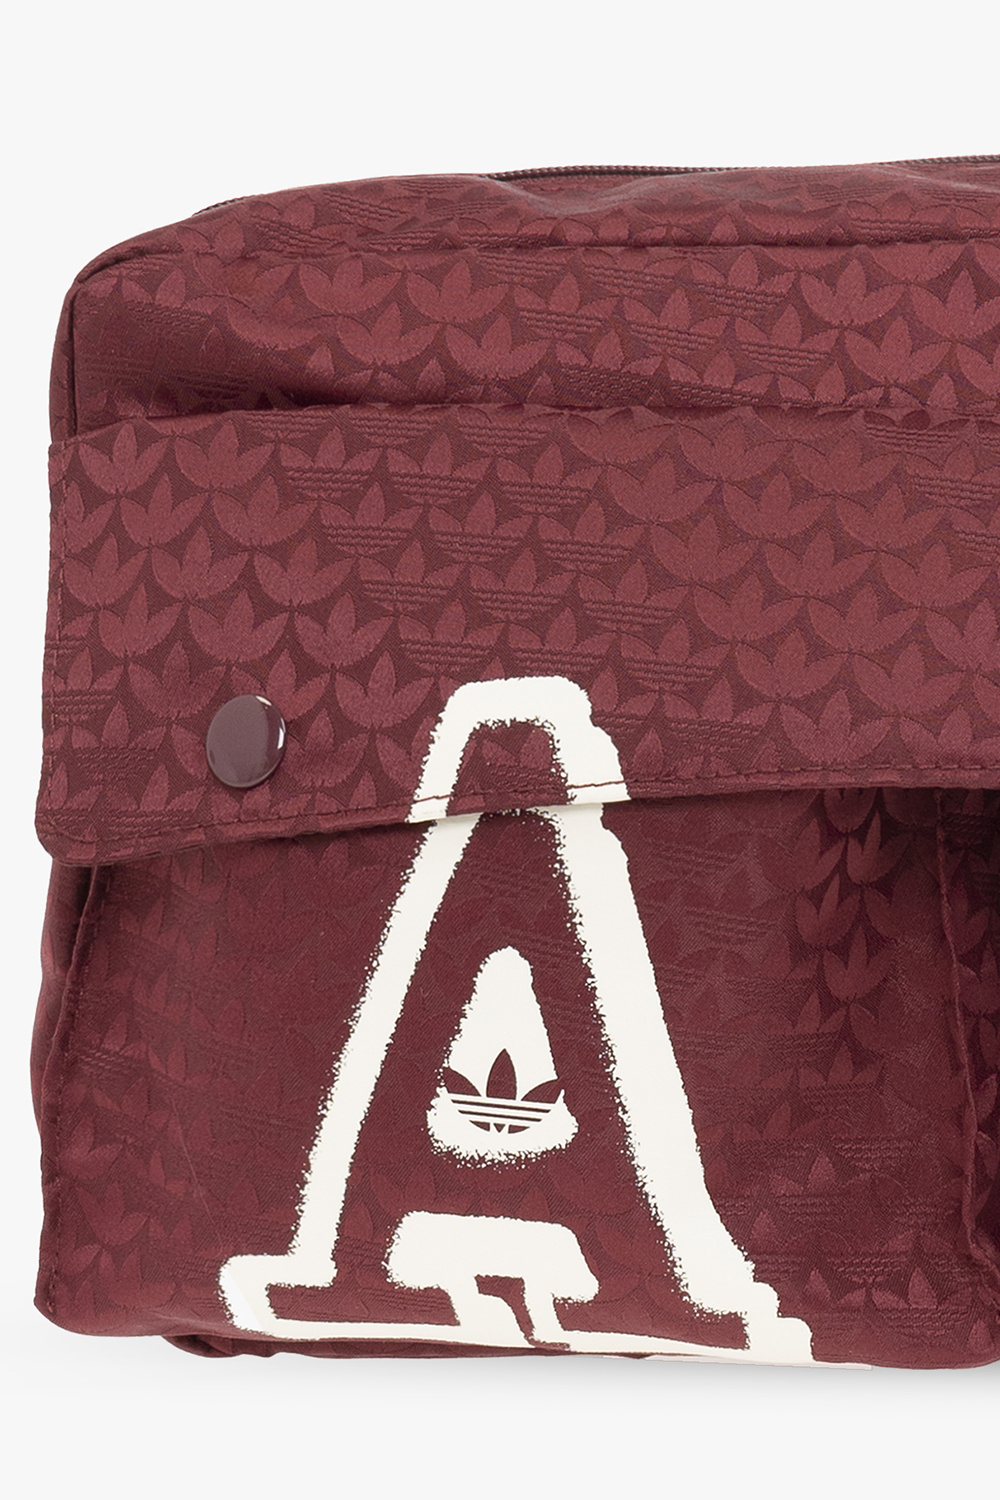 ADIDAS Originals brand new with original box adidas Swift Run X FY2164